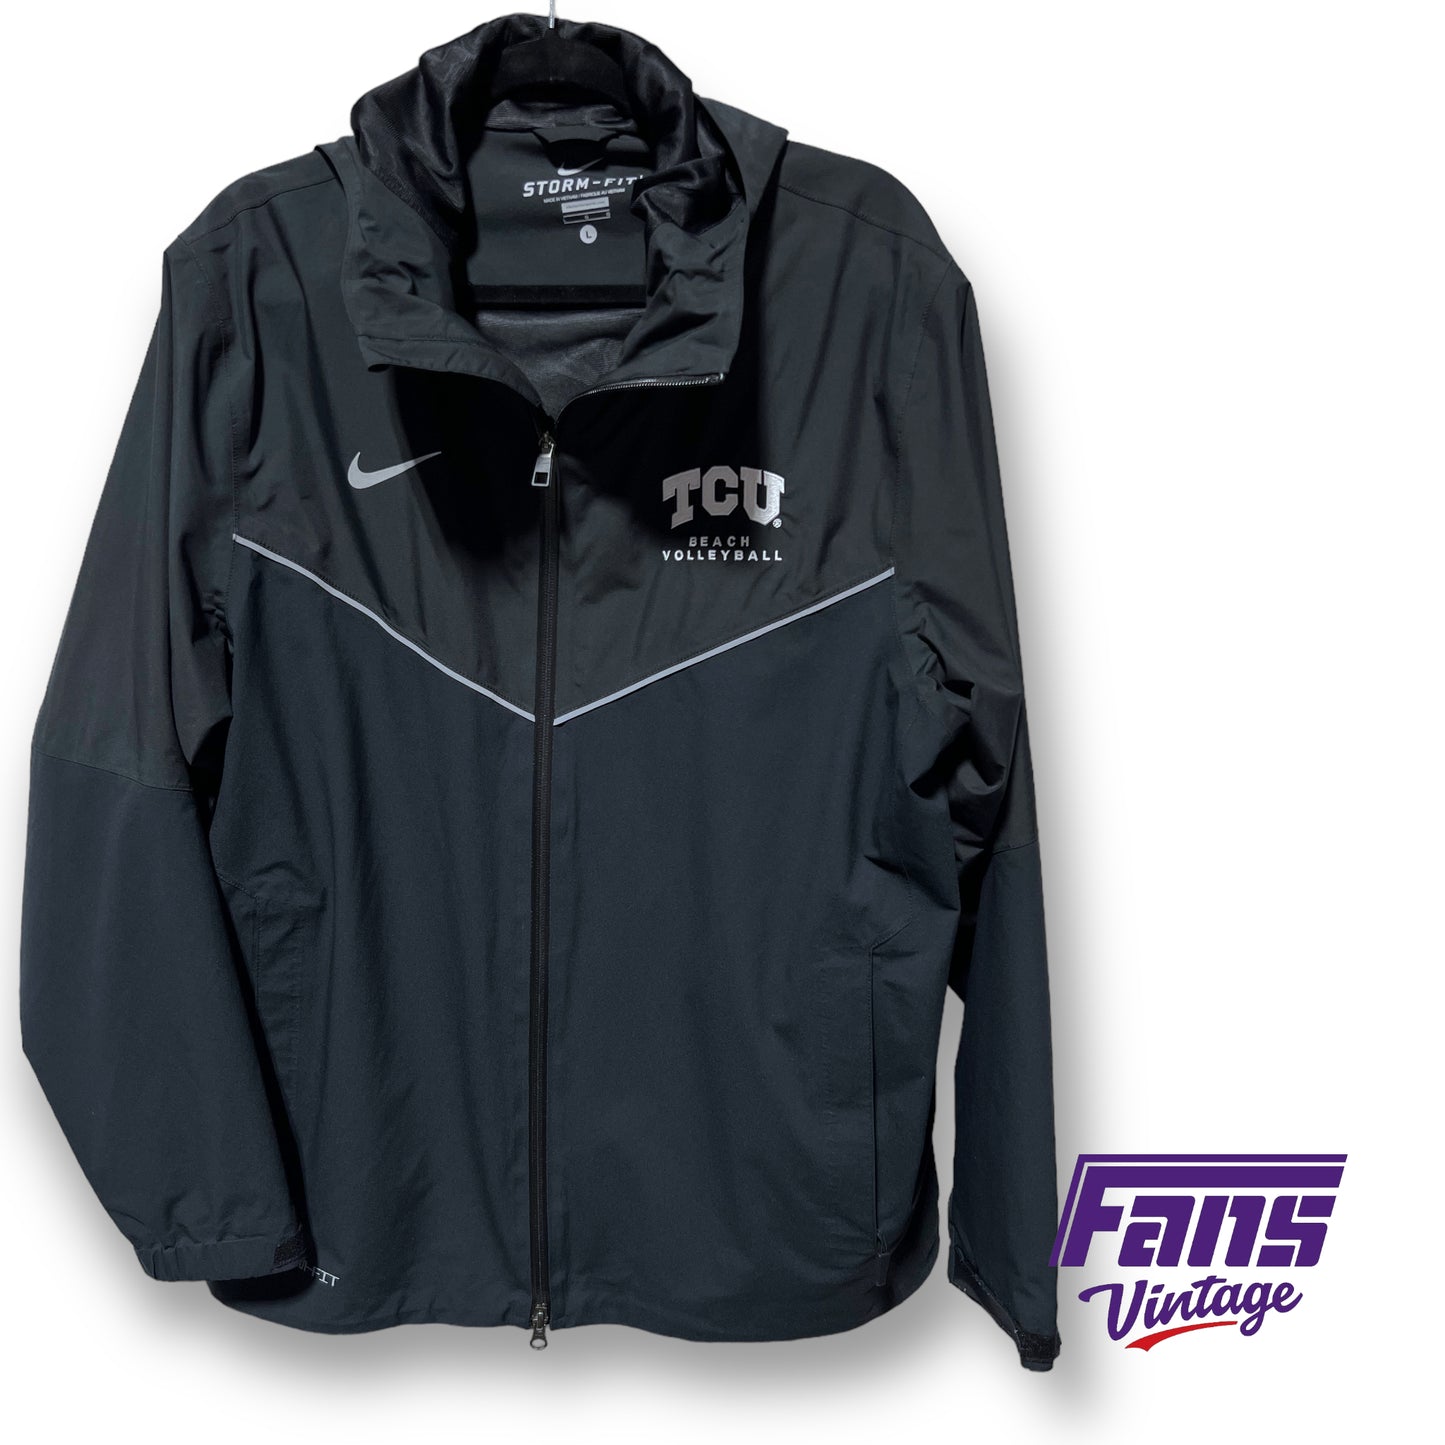 RARE team item! Player Issue TCU Beach Volleyball Nike StormFit sideline jacket